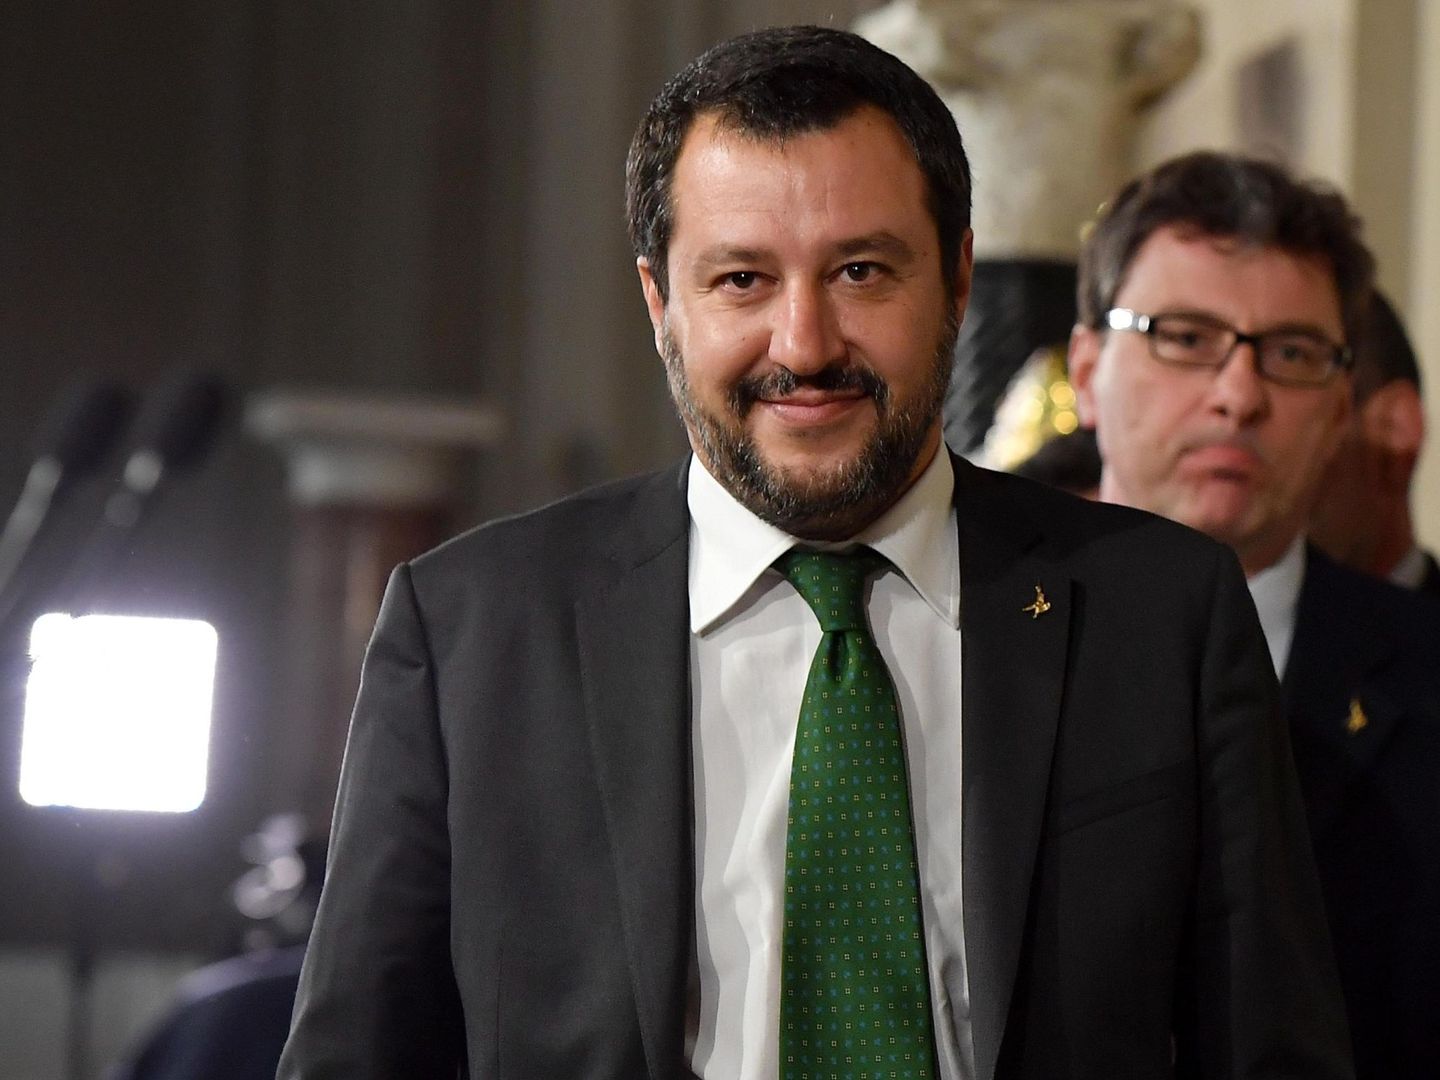 El líder de la Liga Norte, Matteo Salvini. (EFE)